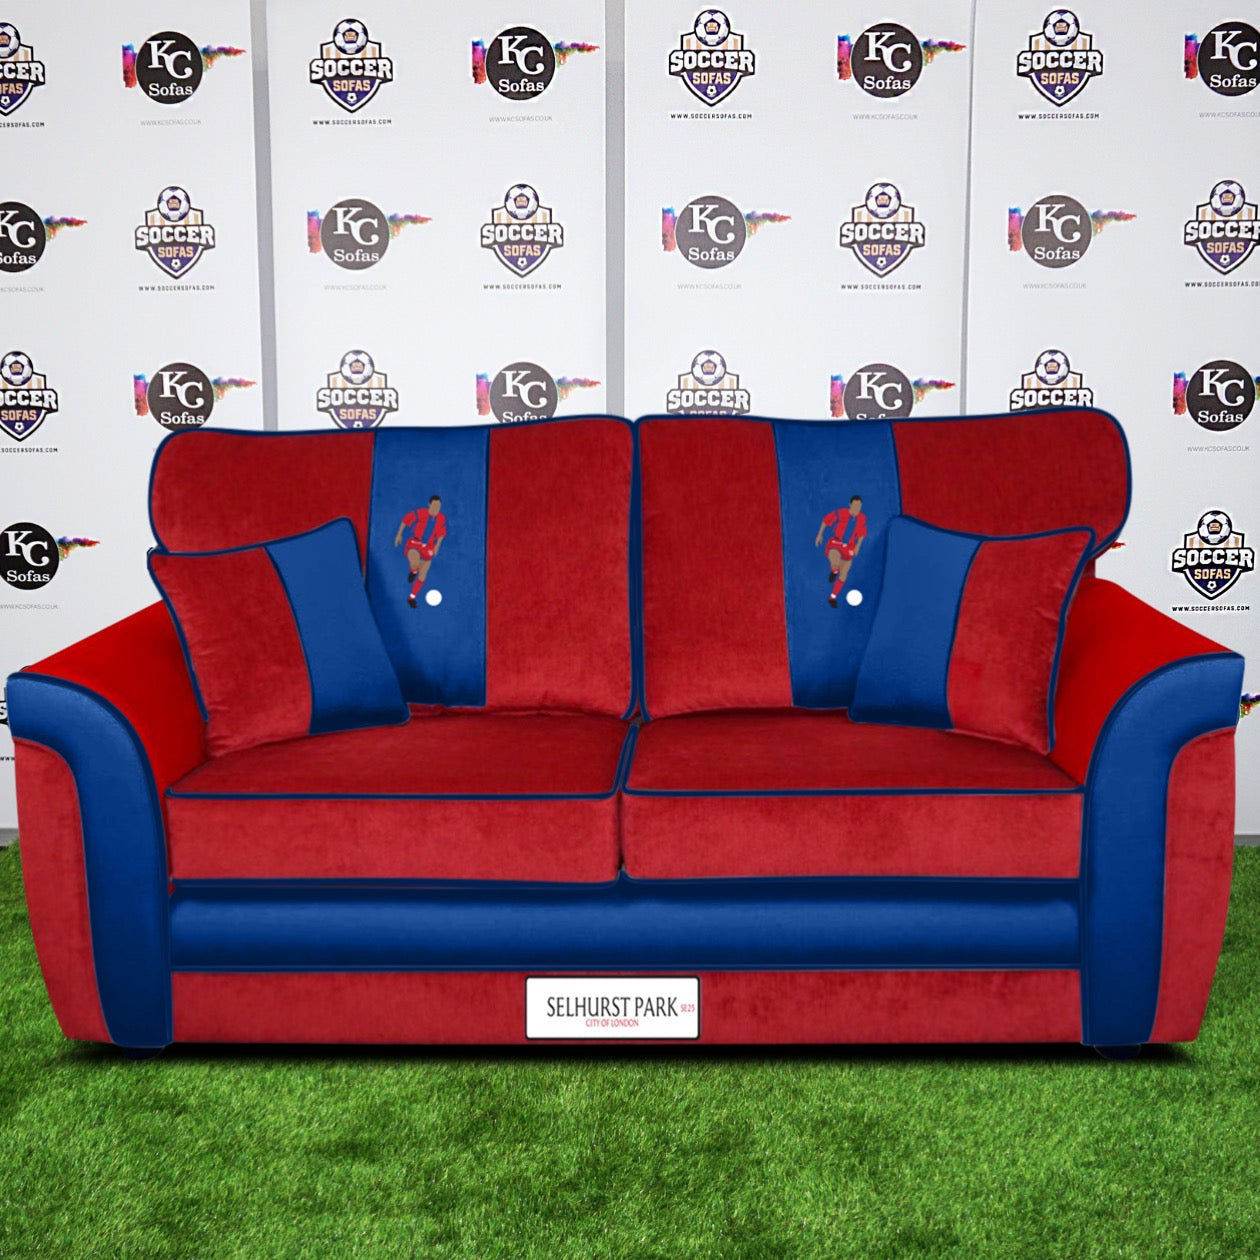 Selhurst Park 3 Seater Sofa (Crystal Palace FC)